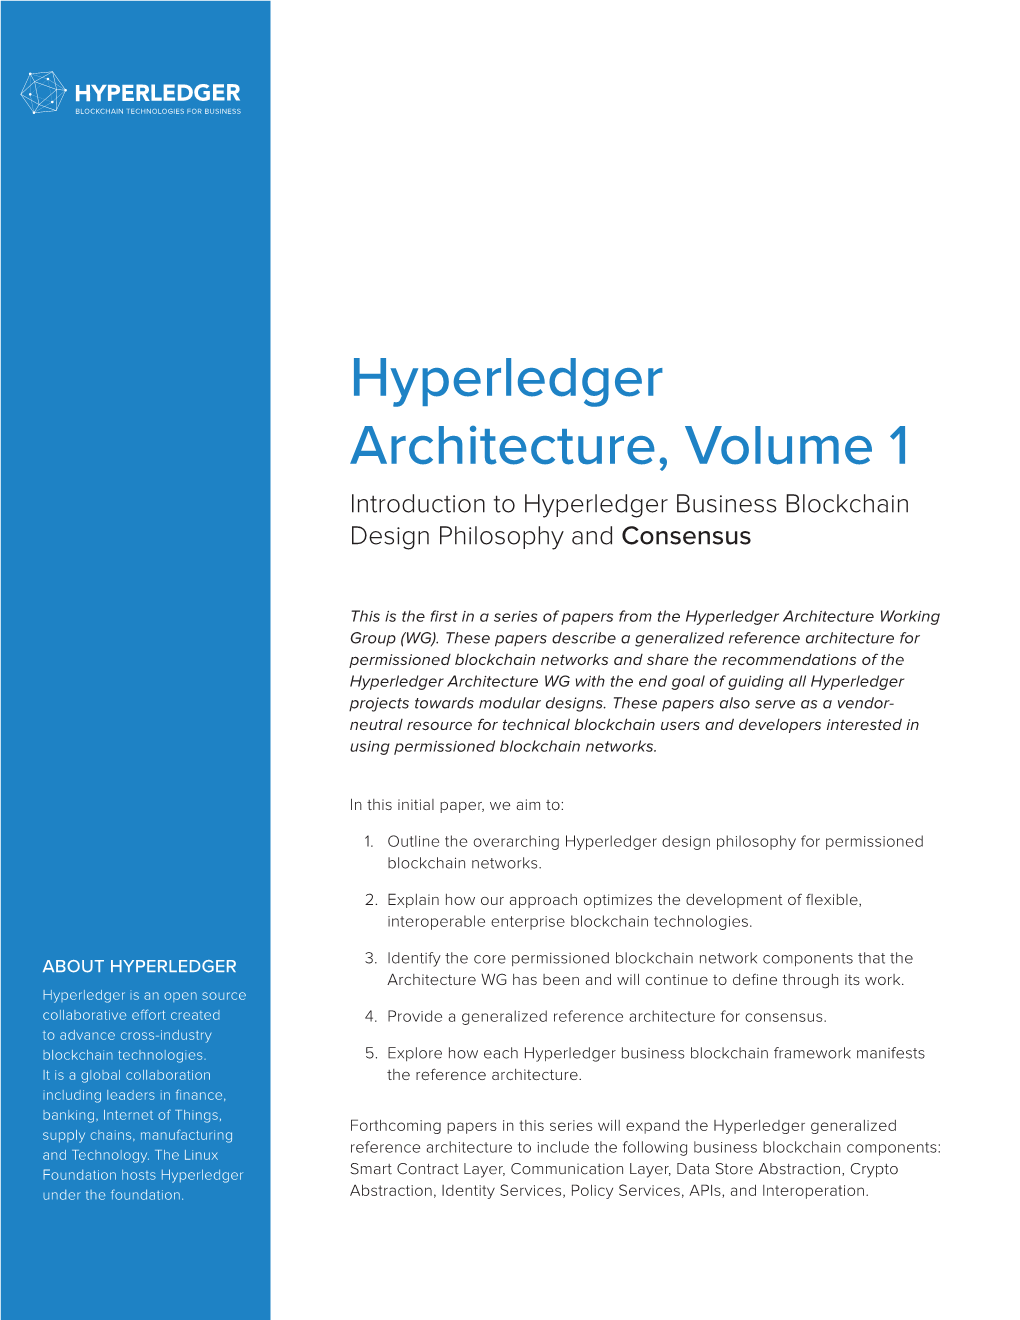 Hyperledger Architecture, Volume 1: Consensus